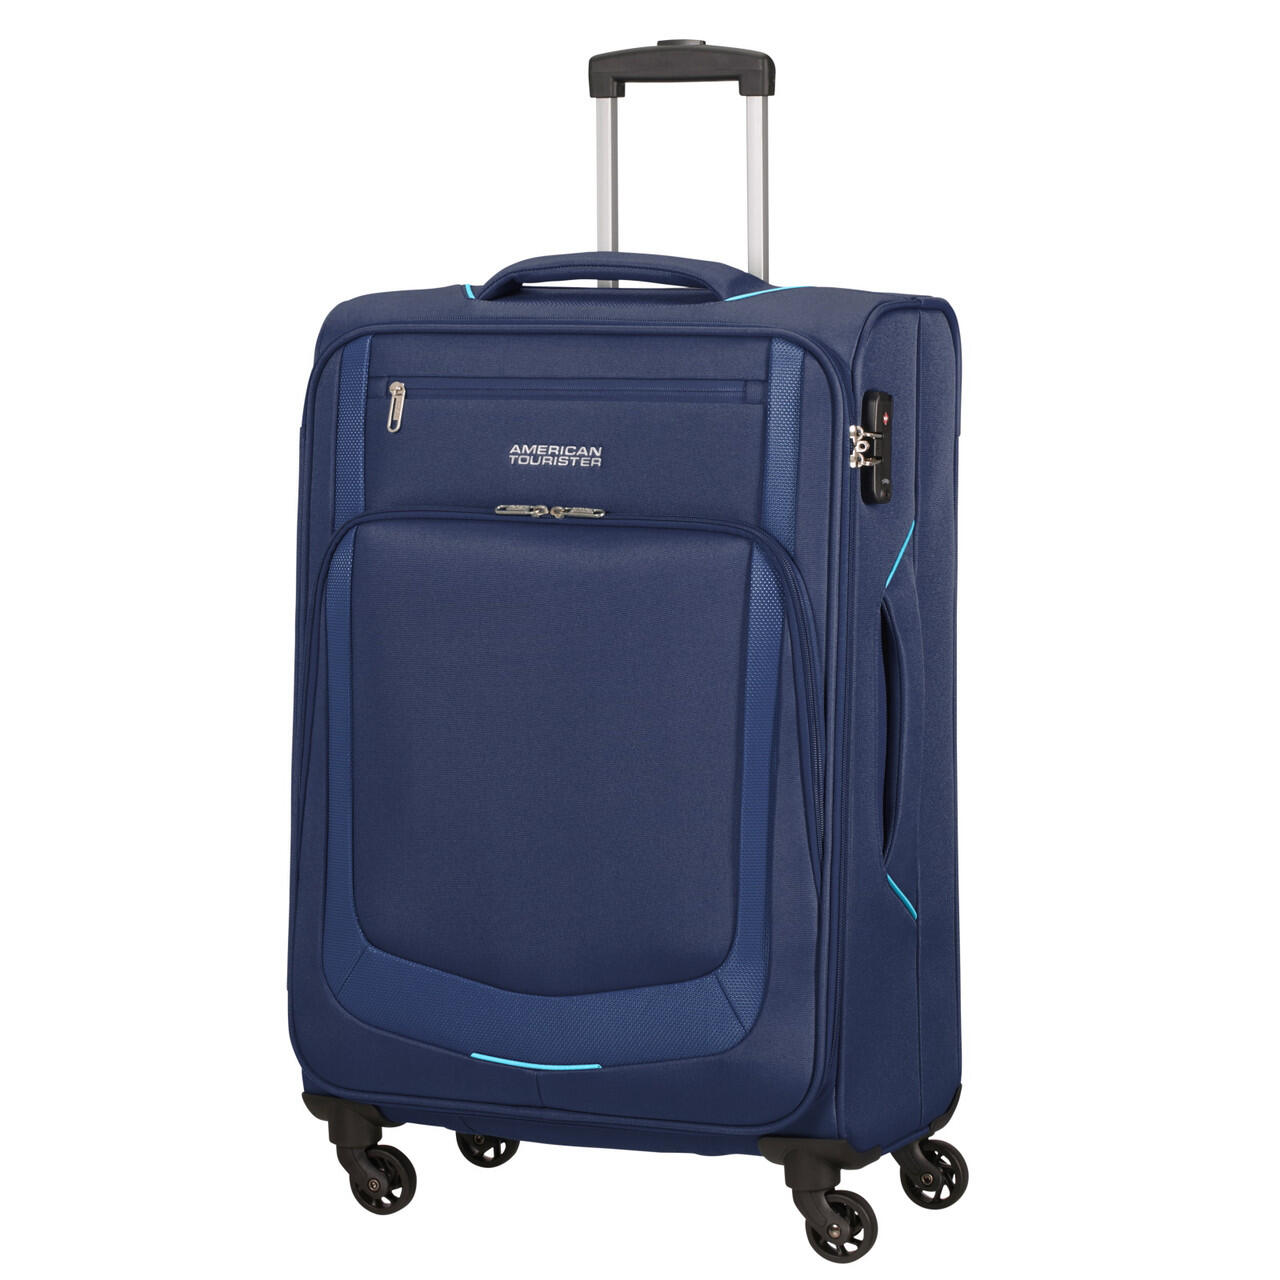 AMERICAN TOURISTER Summer Session Medium Suitcase - 67cm - Dark Blue/Light Blue